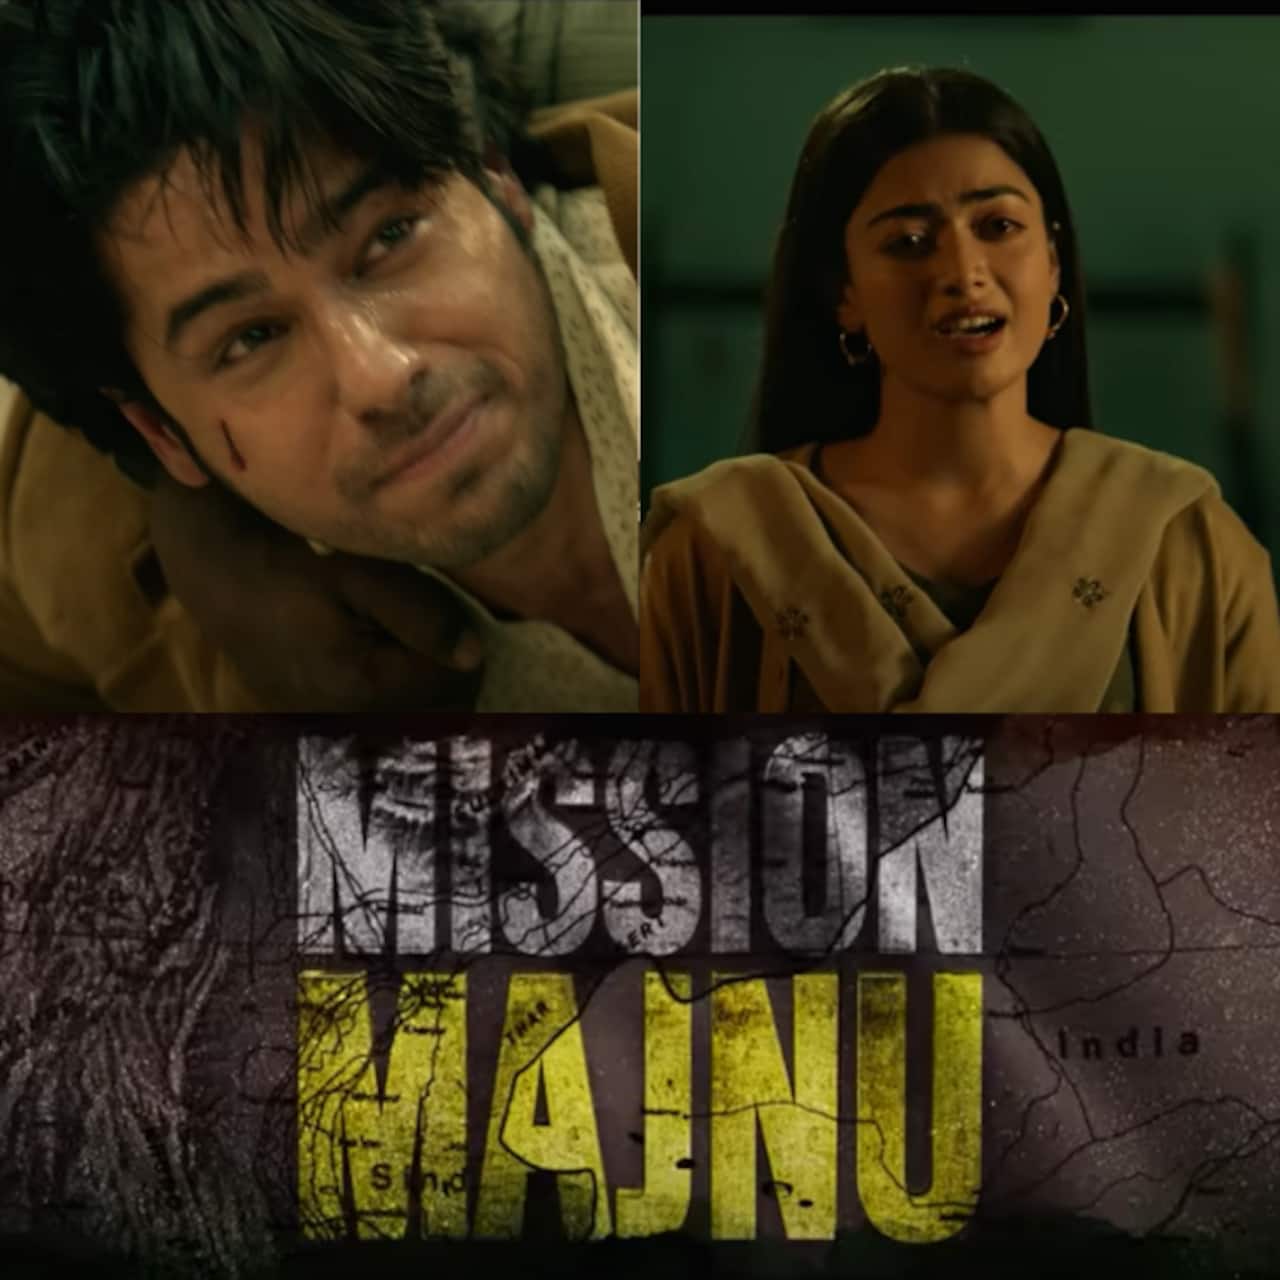 Mission Majnu Trailer: Sidharth Malhotra impresses as RAW agent; Rashmika Mandanna is gorgeous; fans wish it was a theatrical release instead of OTT